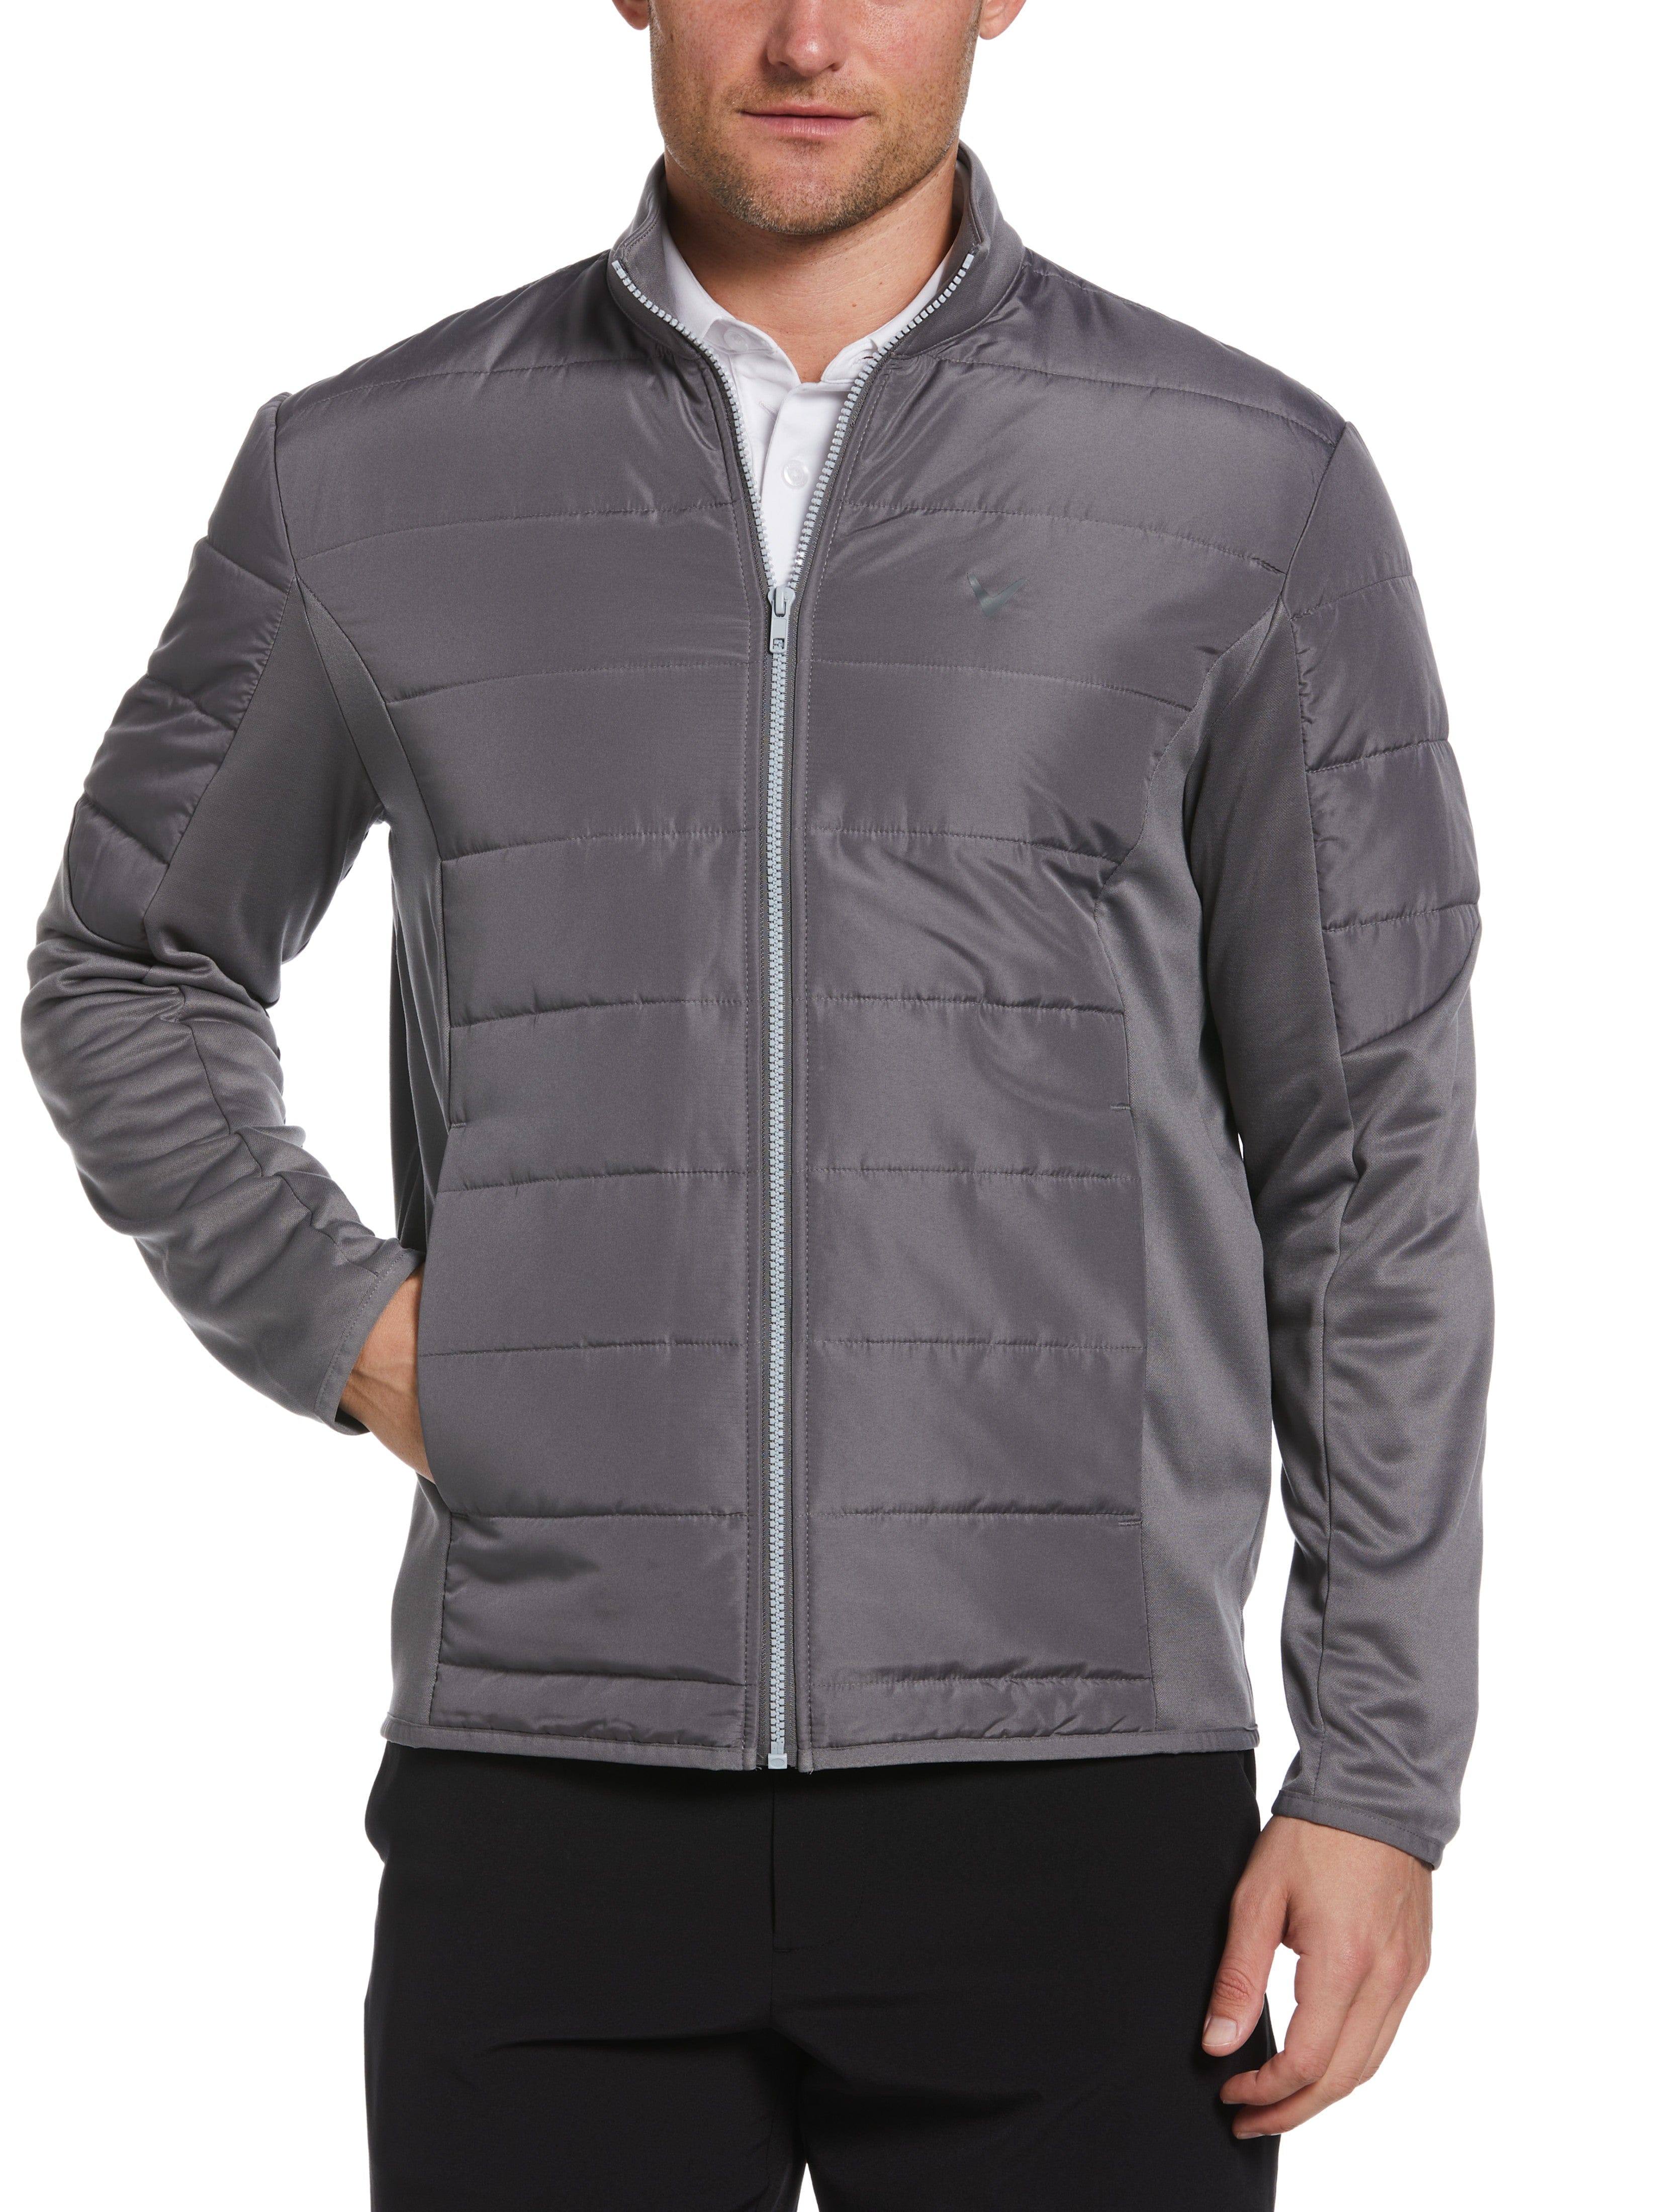 Callaway Apparel Mens Hybrid Performance Puffer Jacket Top, Size 3XL, Quiet Shade Gray, 100% Polyester | Golf Apparel Shop